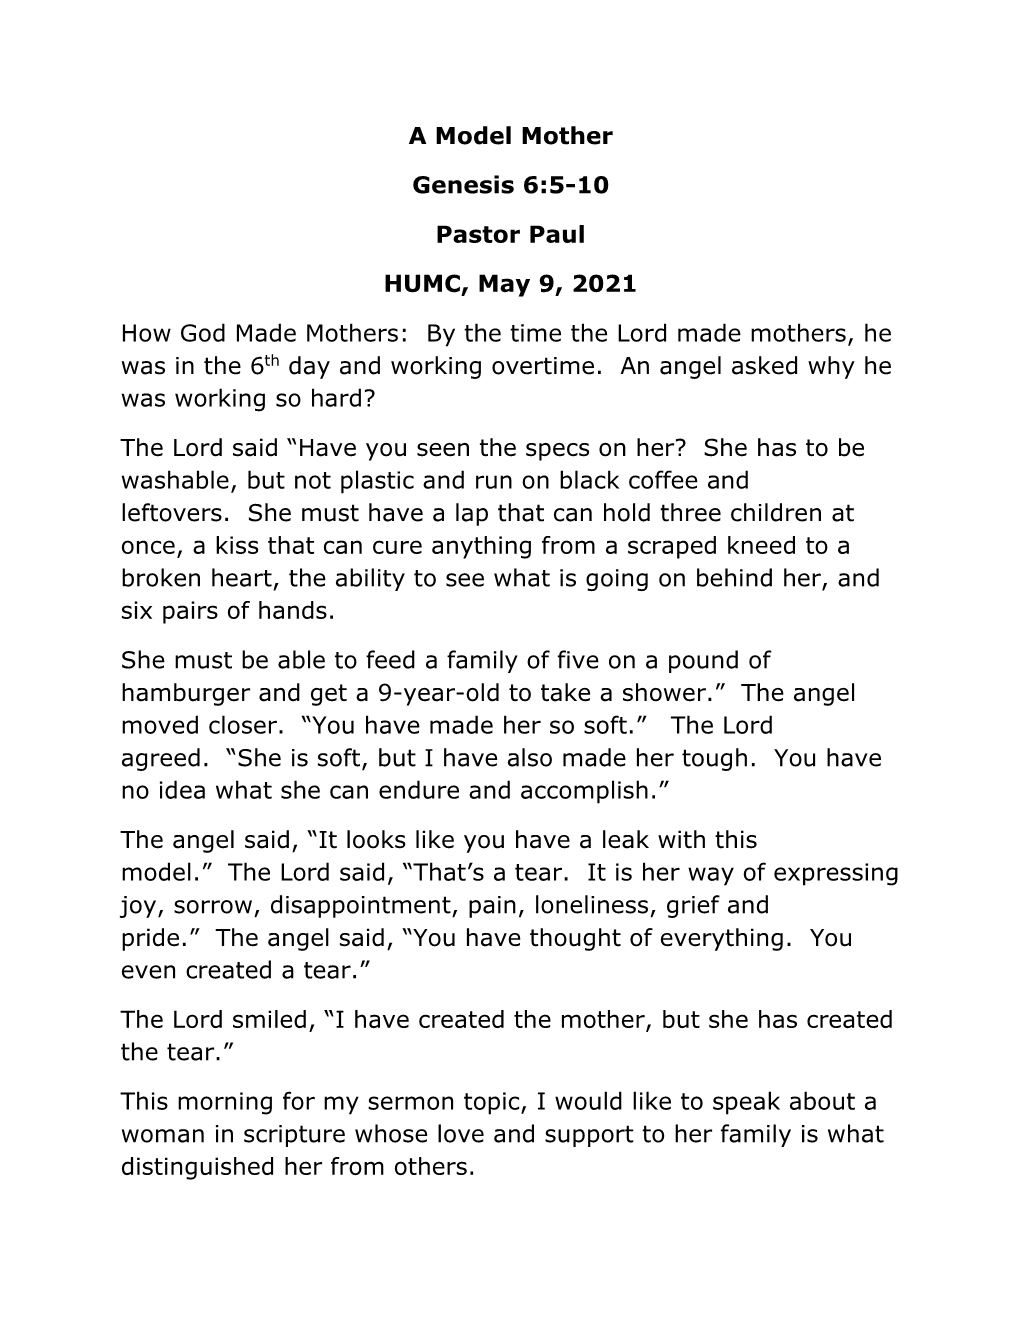 A Model Mother Genesis 6:5-10 Pastor Paul